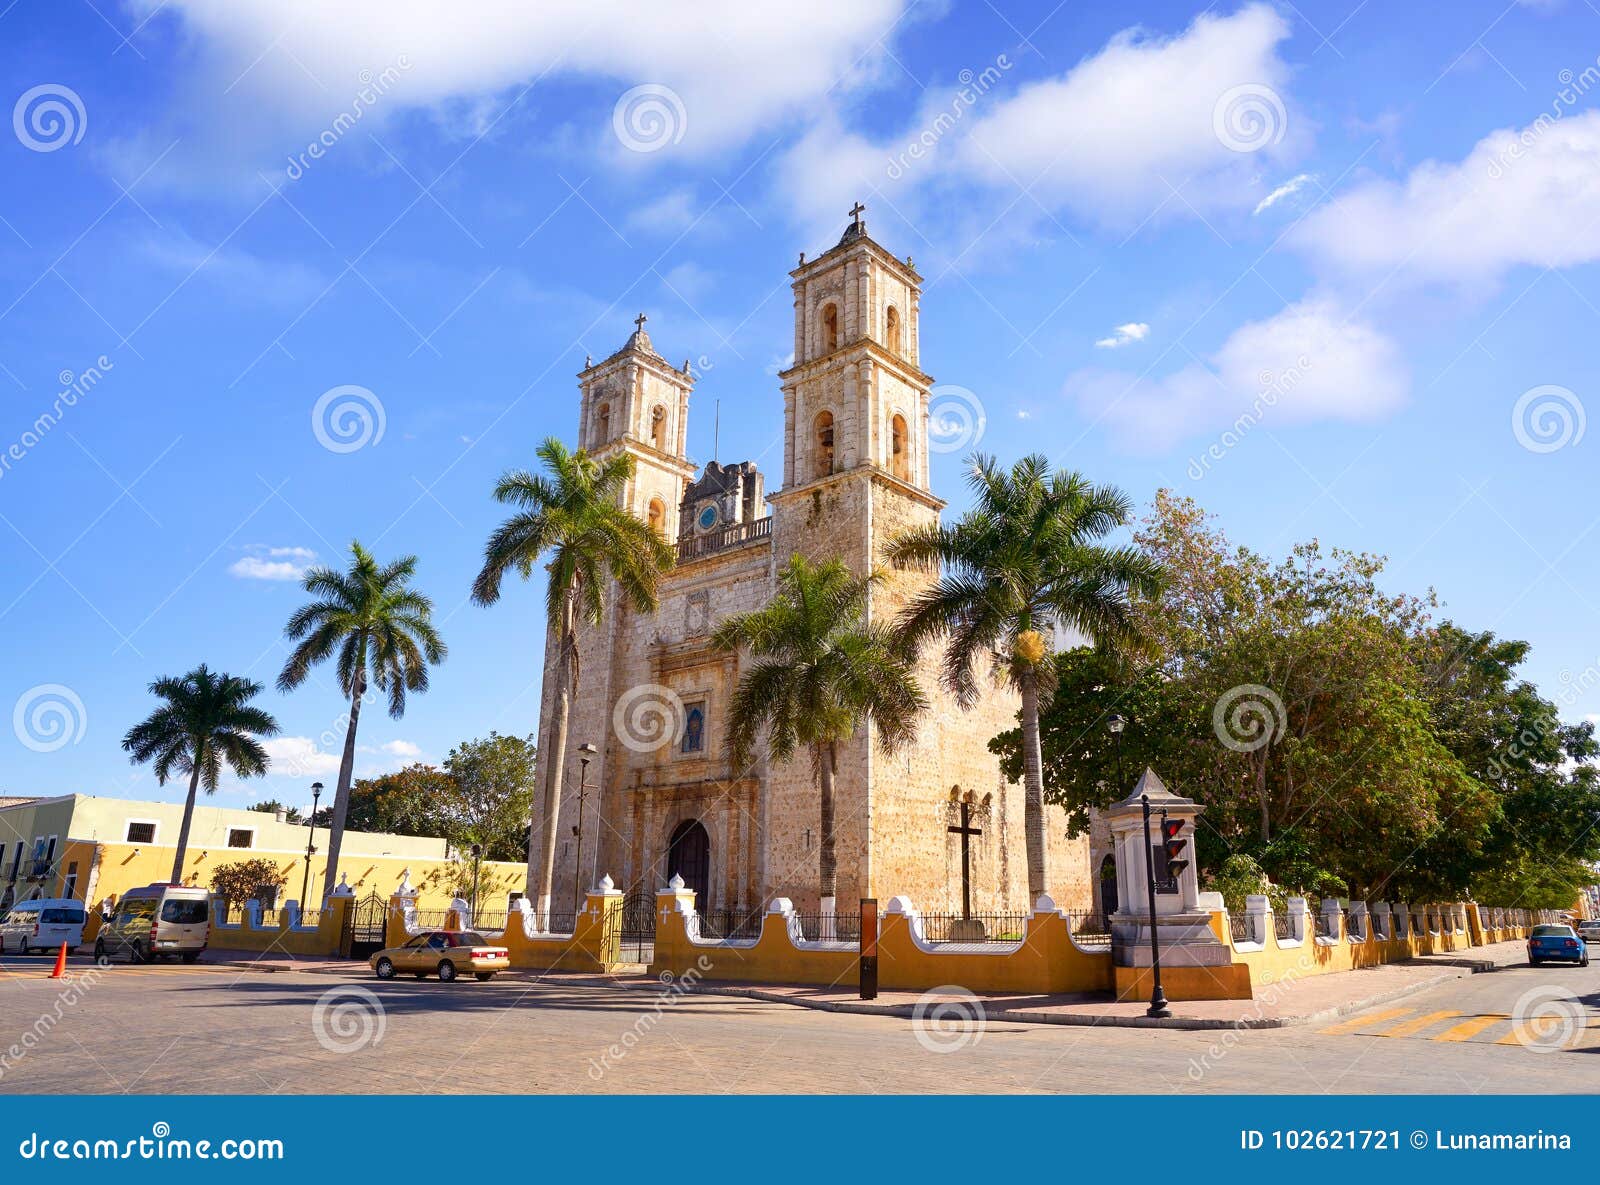 valladolid san gervasio church of yucatan